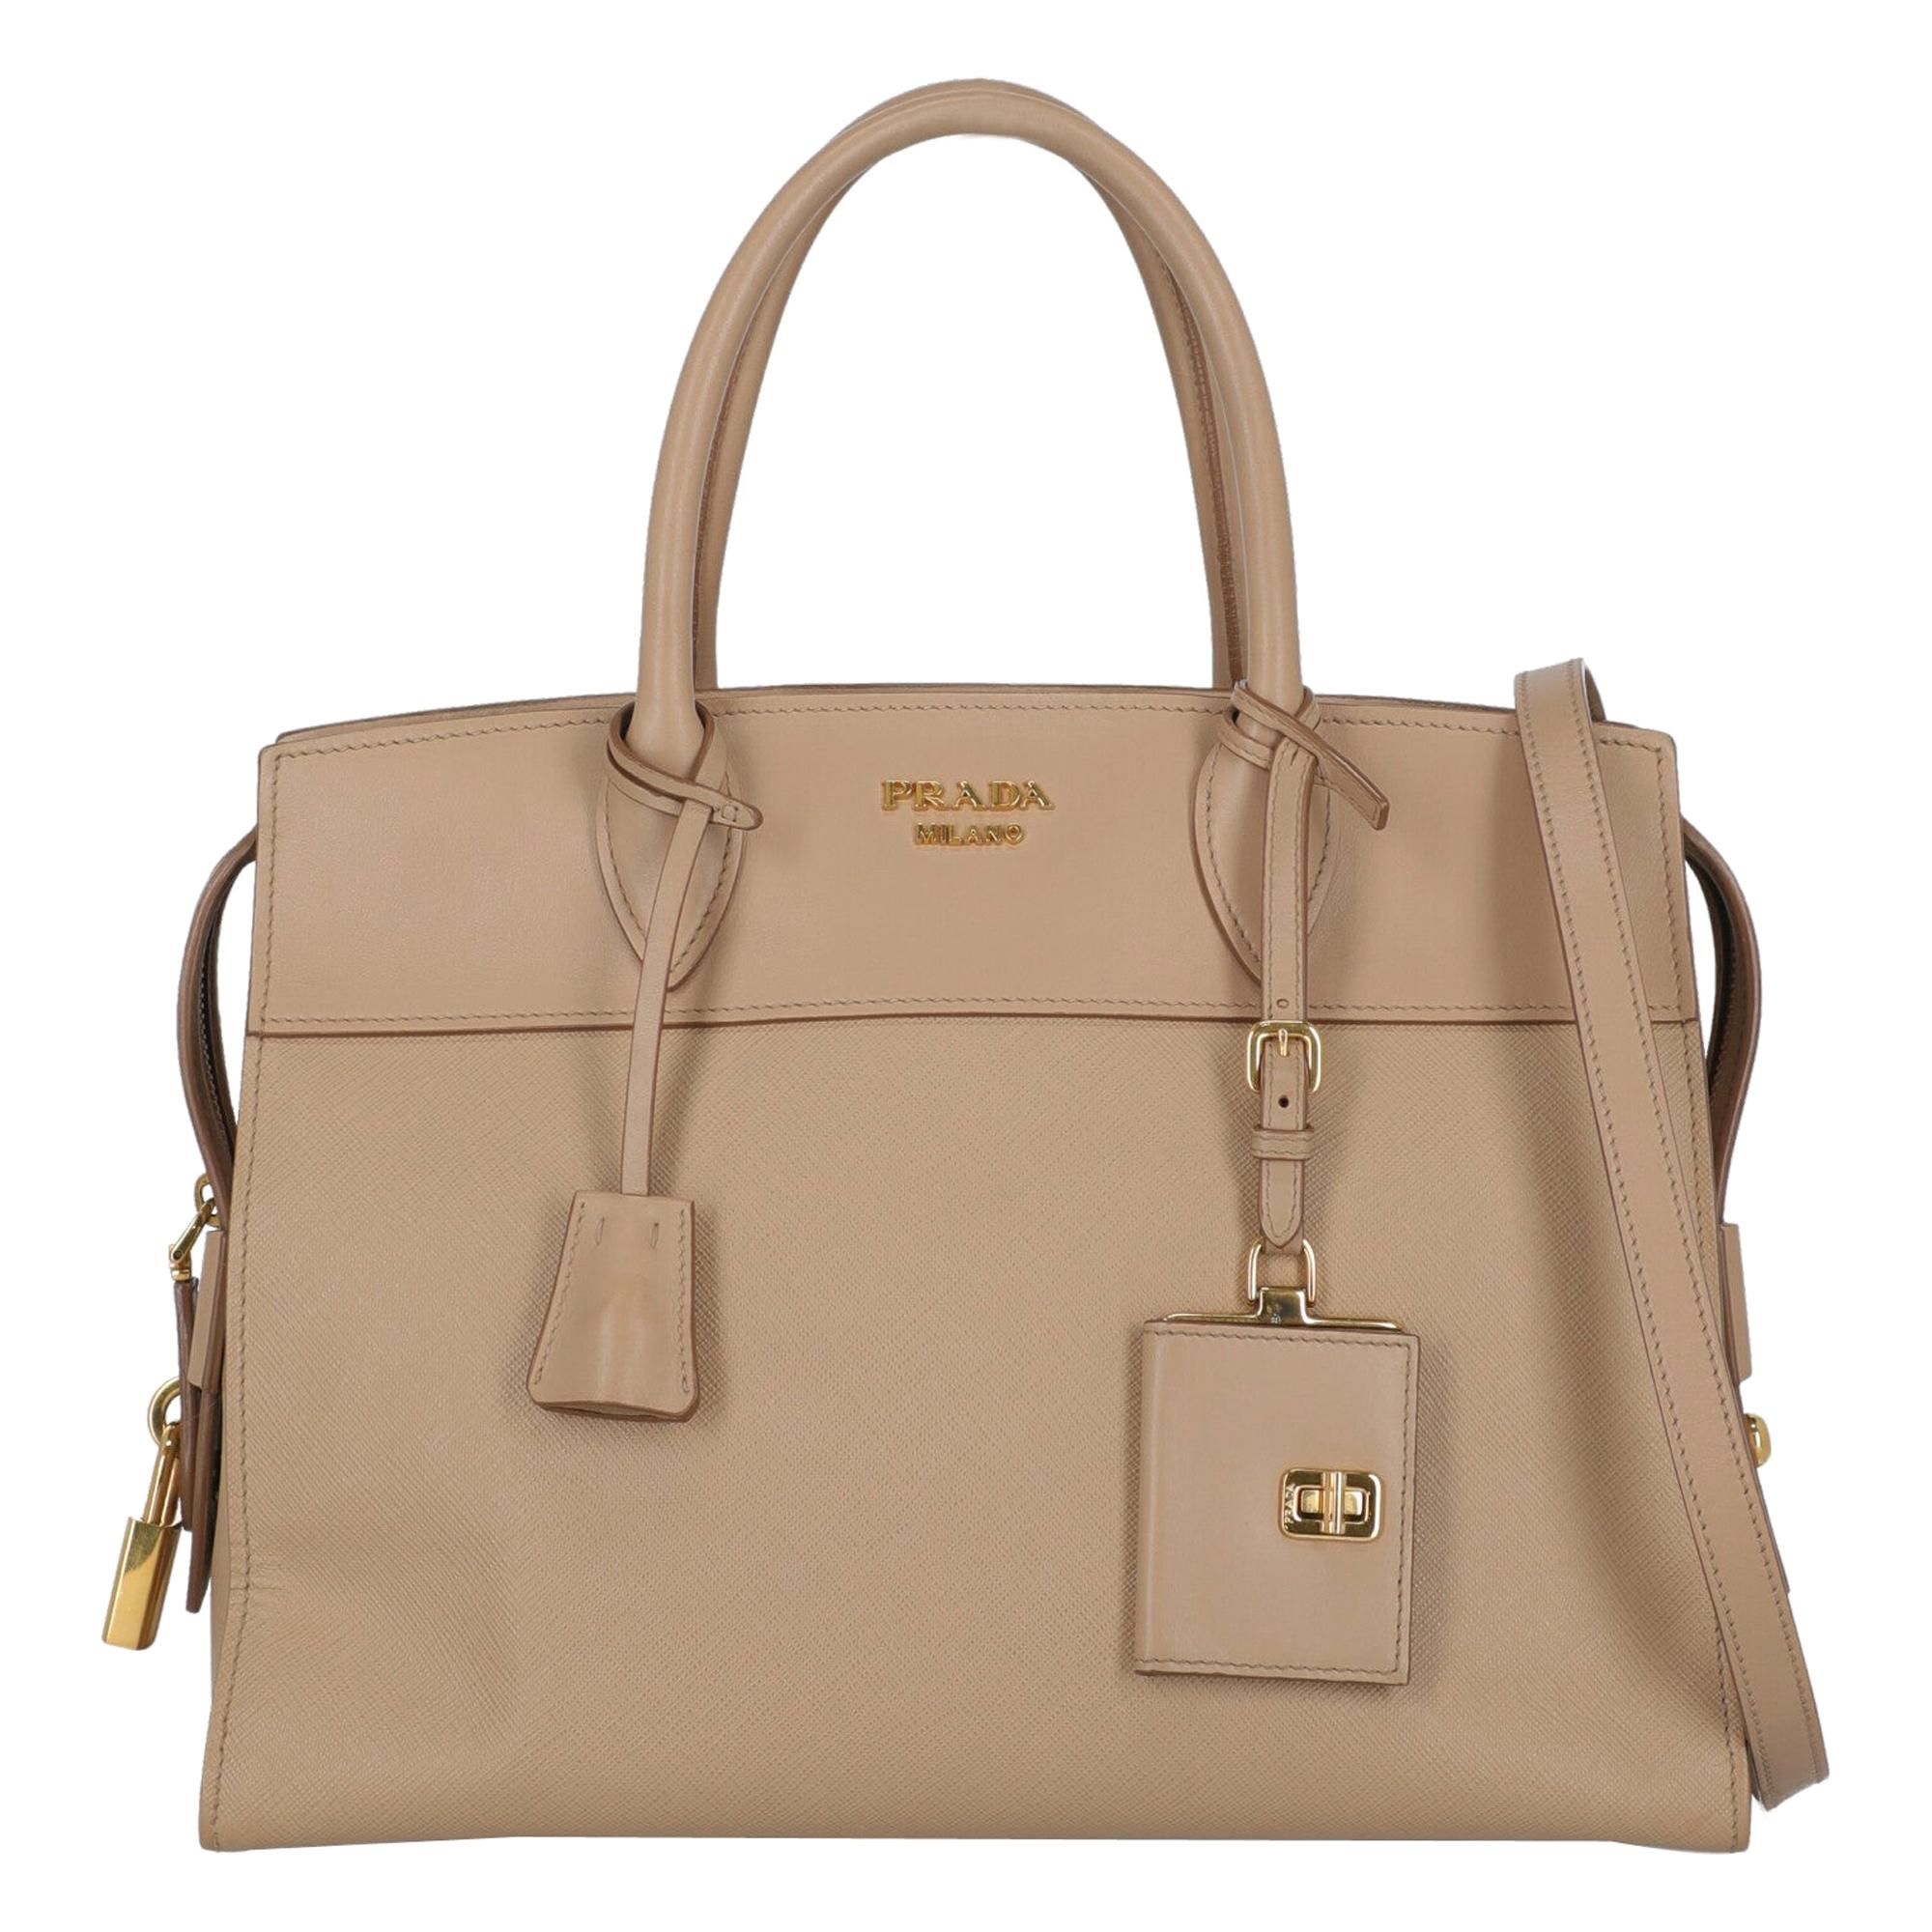 Prada Women's Handbag Esplanade Beige Leather For Sale